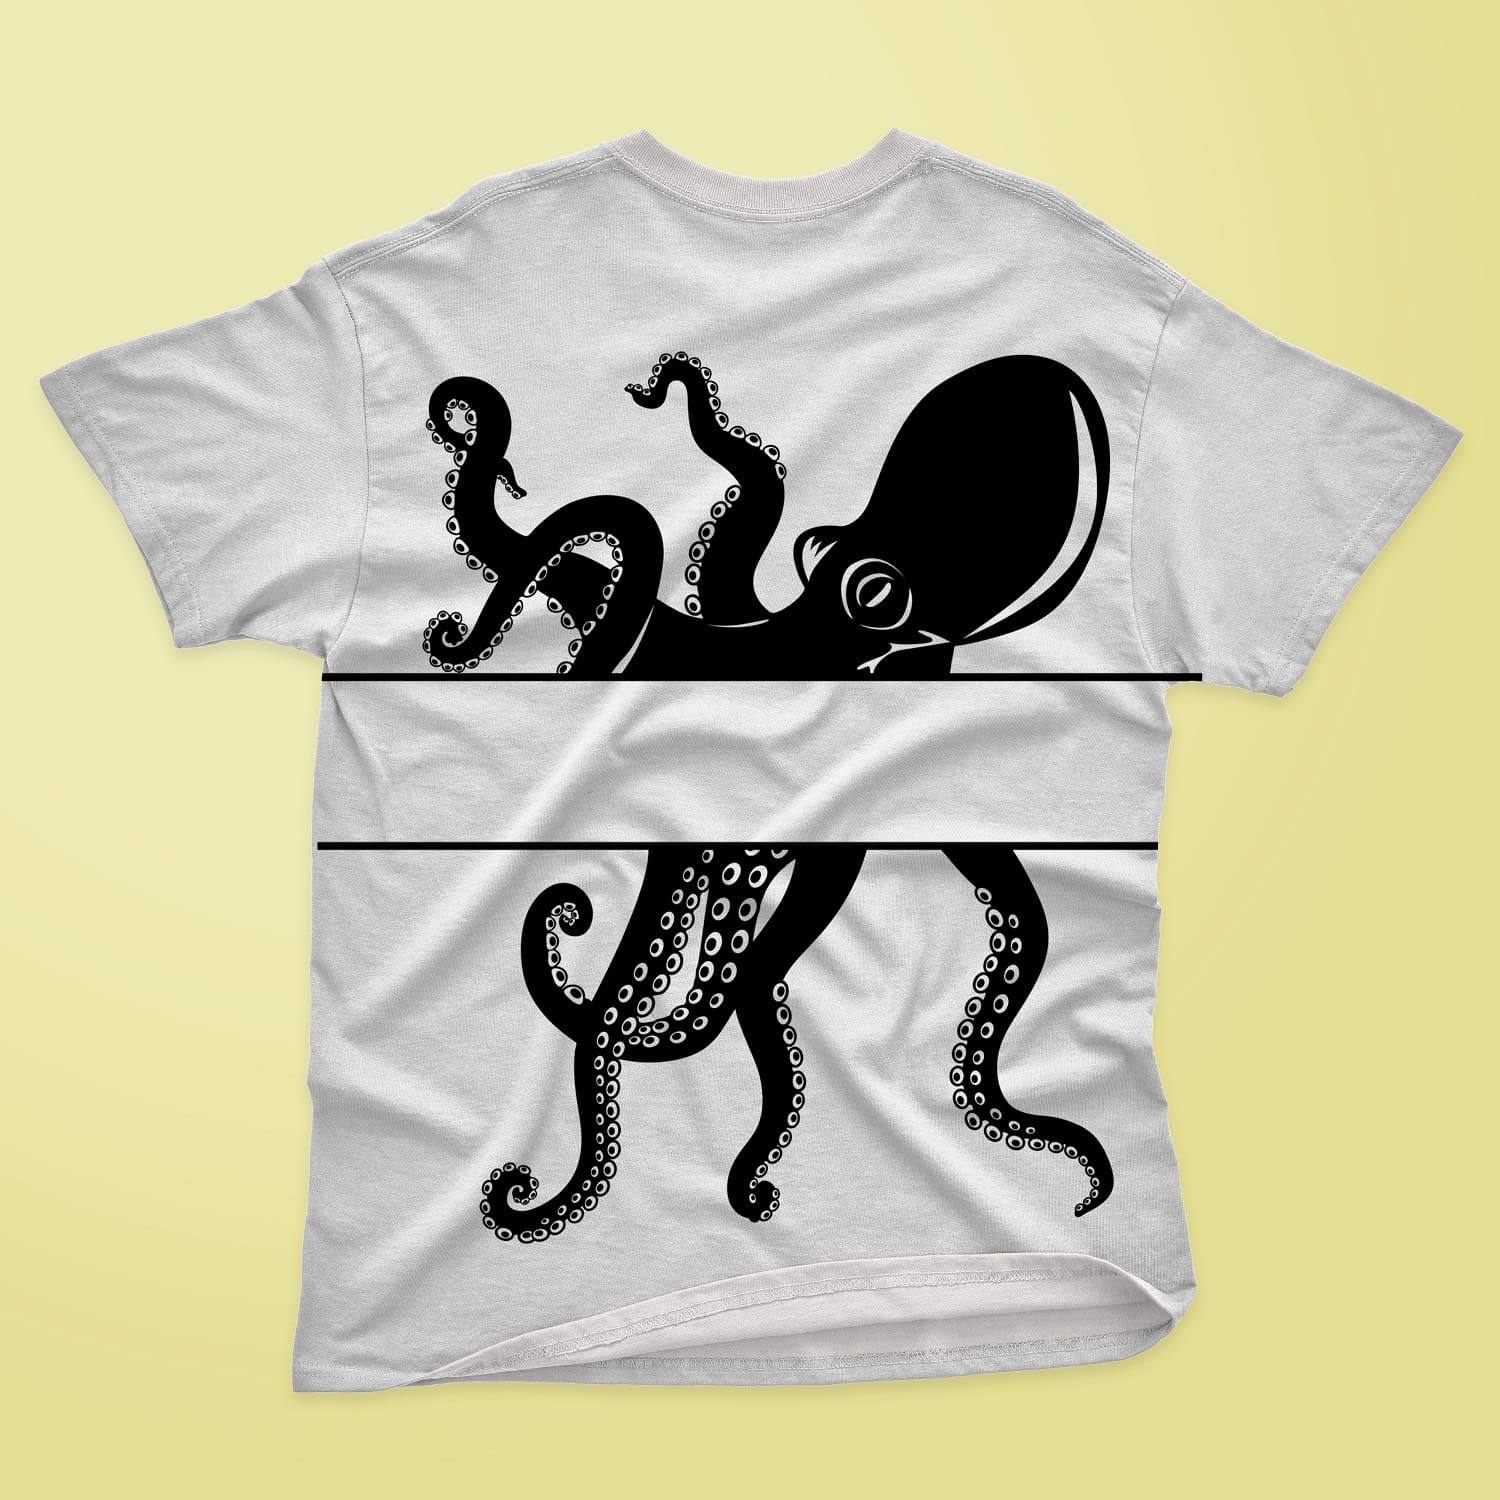 Monogram Octopus white t-shirt design on yellow background.